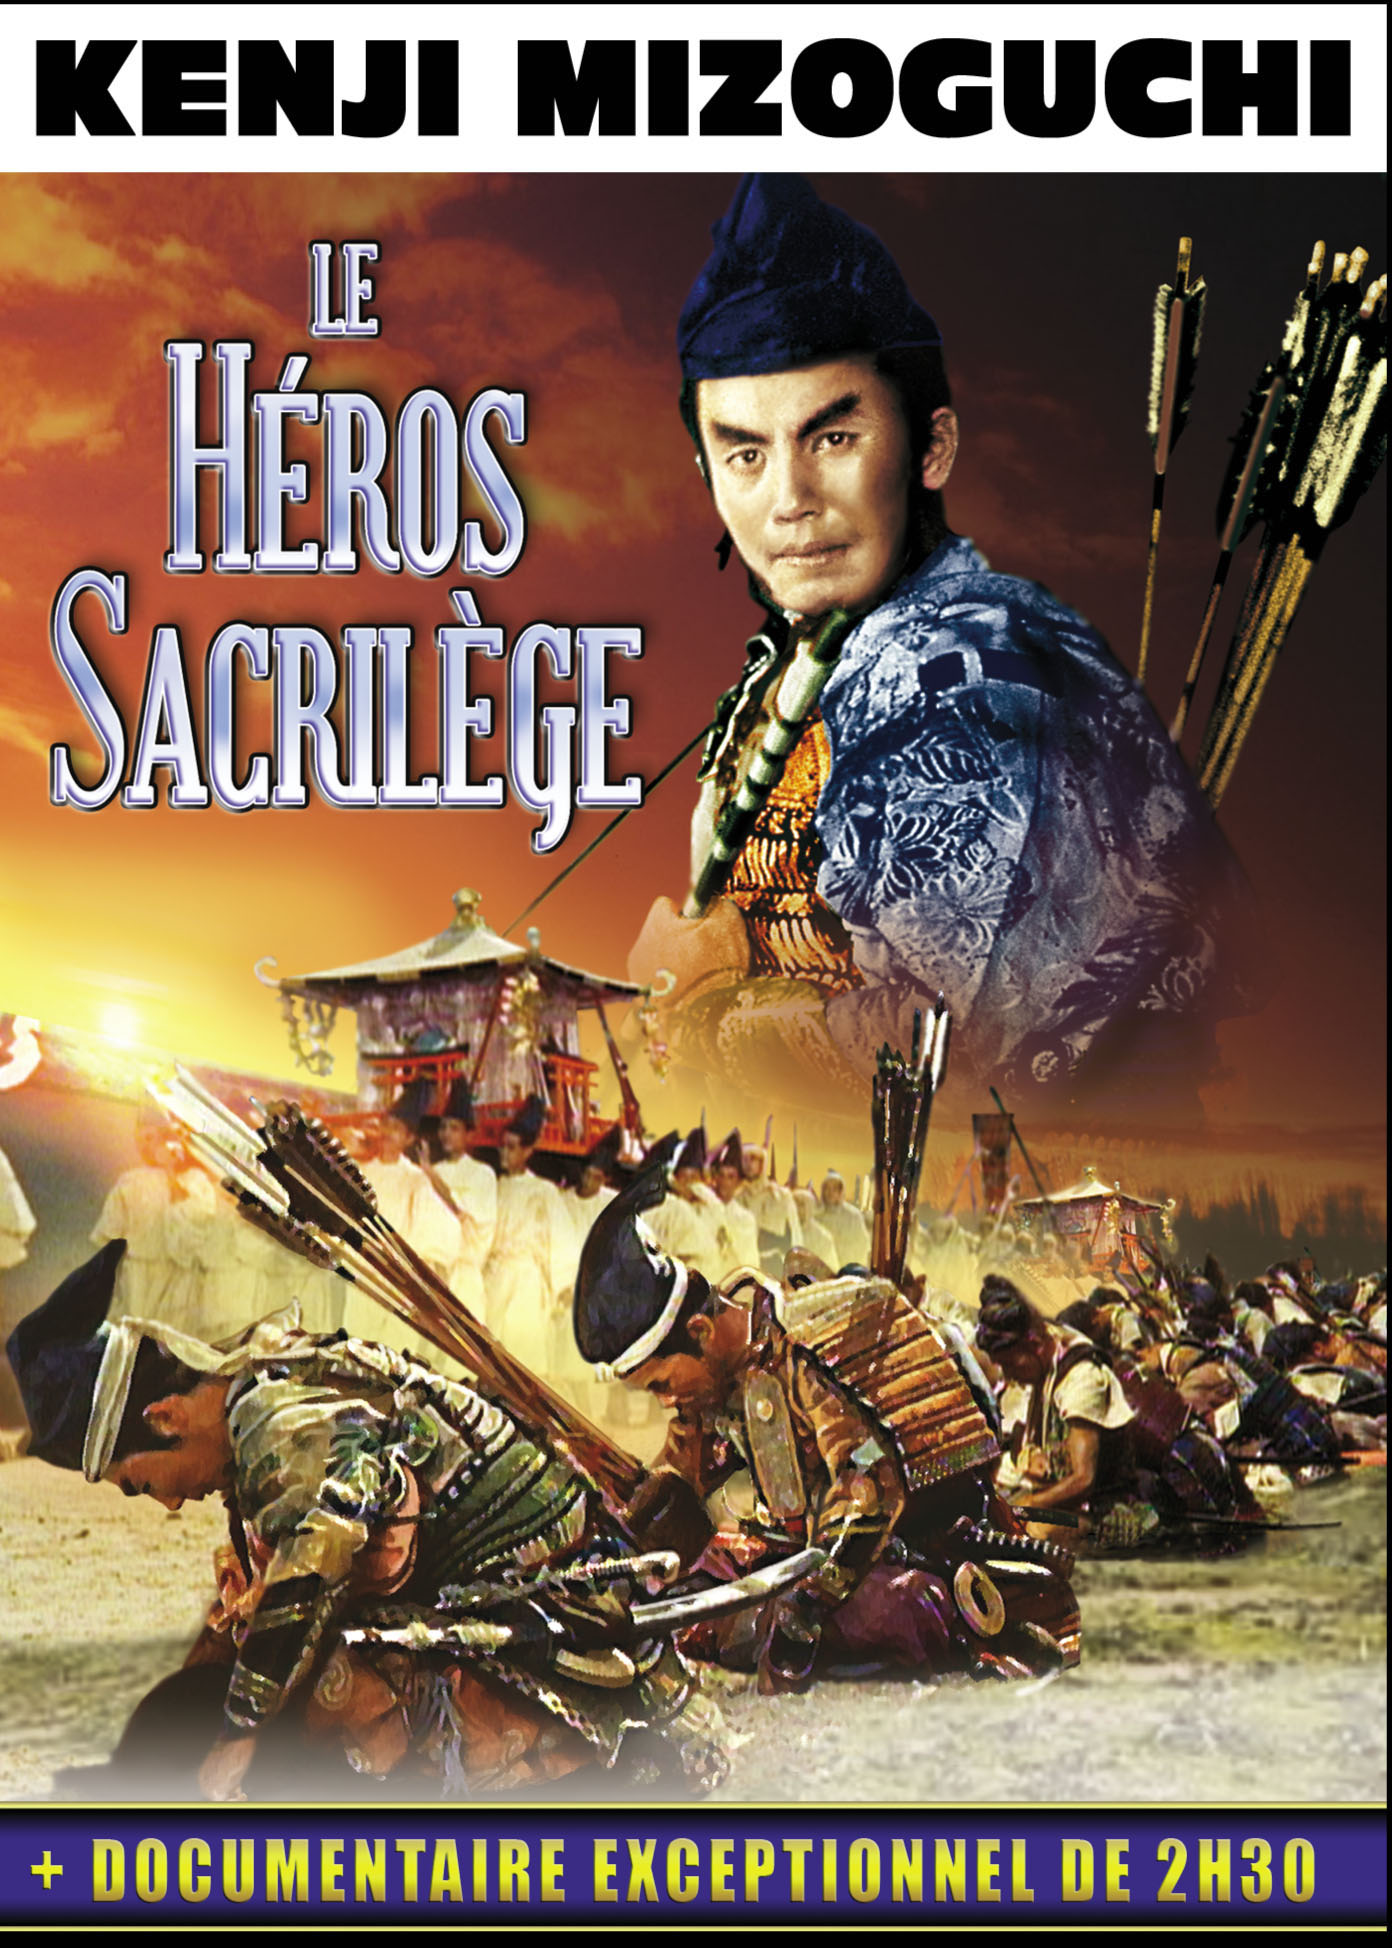 HEROS SACRILEGE (LE) - film de Mizoguchi